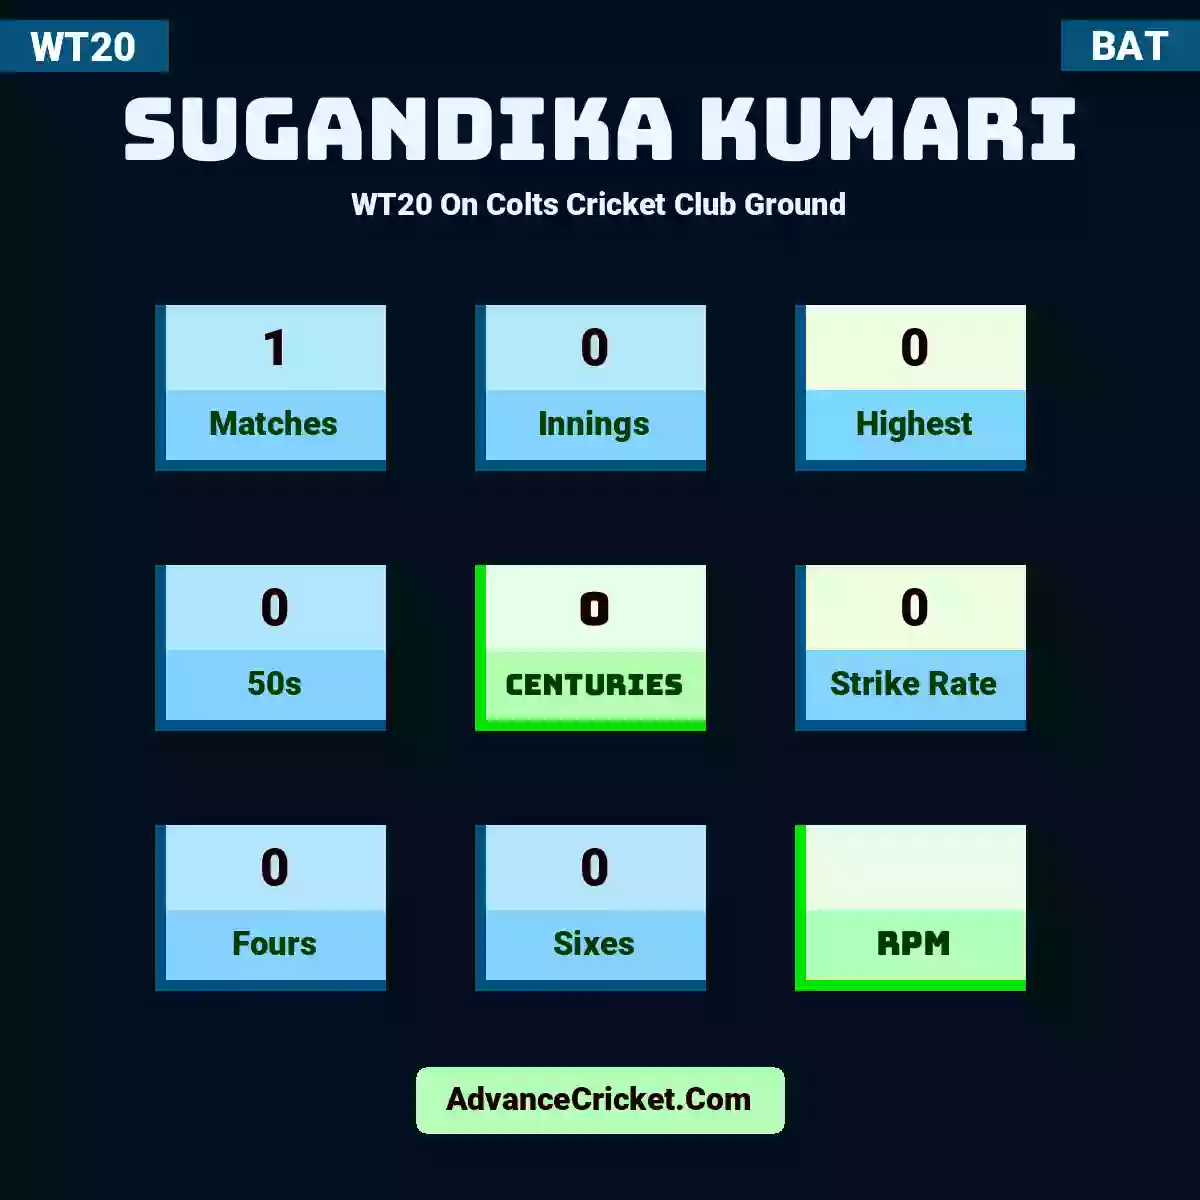 Sugandika Kumari WT20  On Colts Cricket Club Ground, Sugandika Kumari played 1 matches, scored 0 runs as highest, 0 half-centuries, and 0 centuries, with a strike rate of 0. S.Kumari hit 0 fours and 0 sixes.